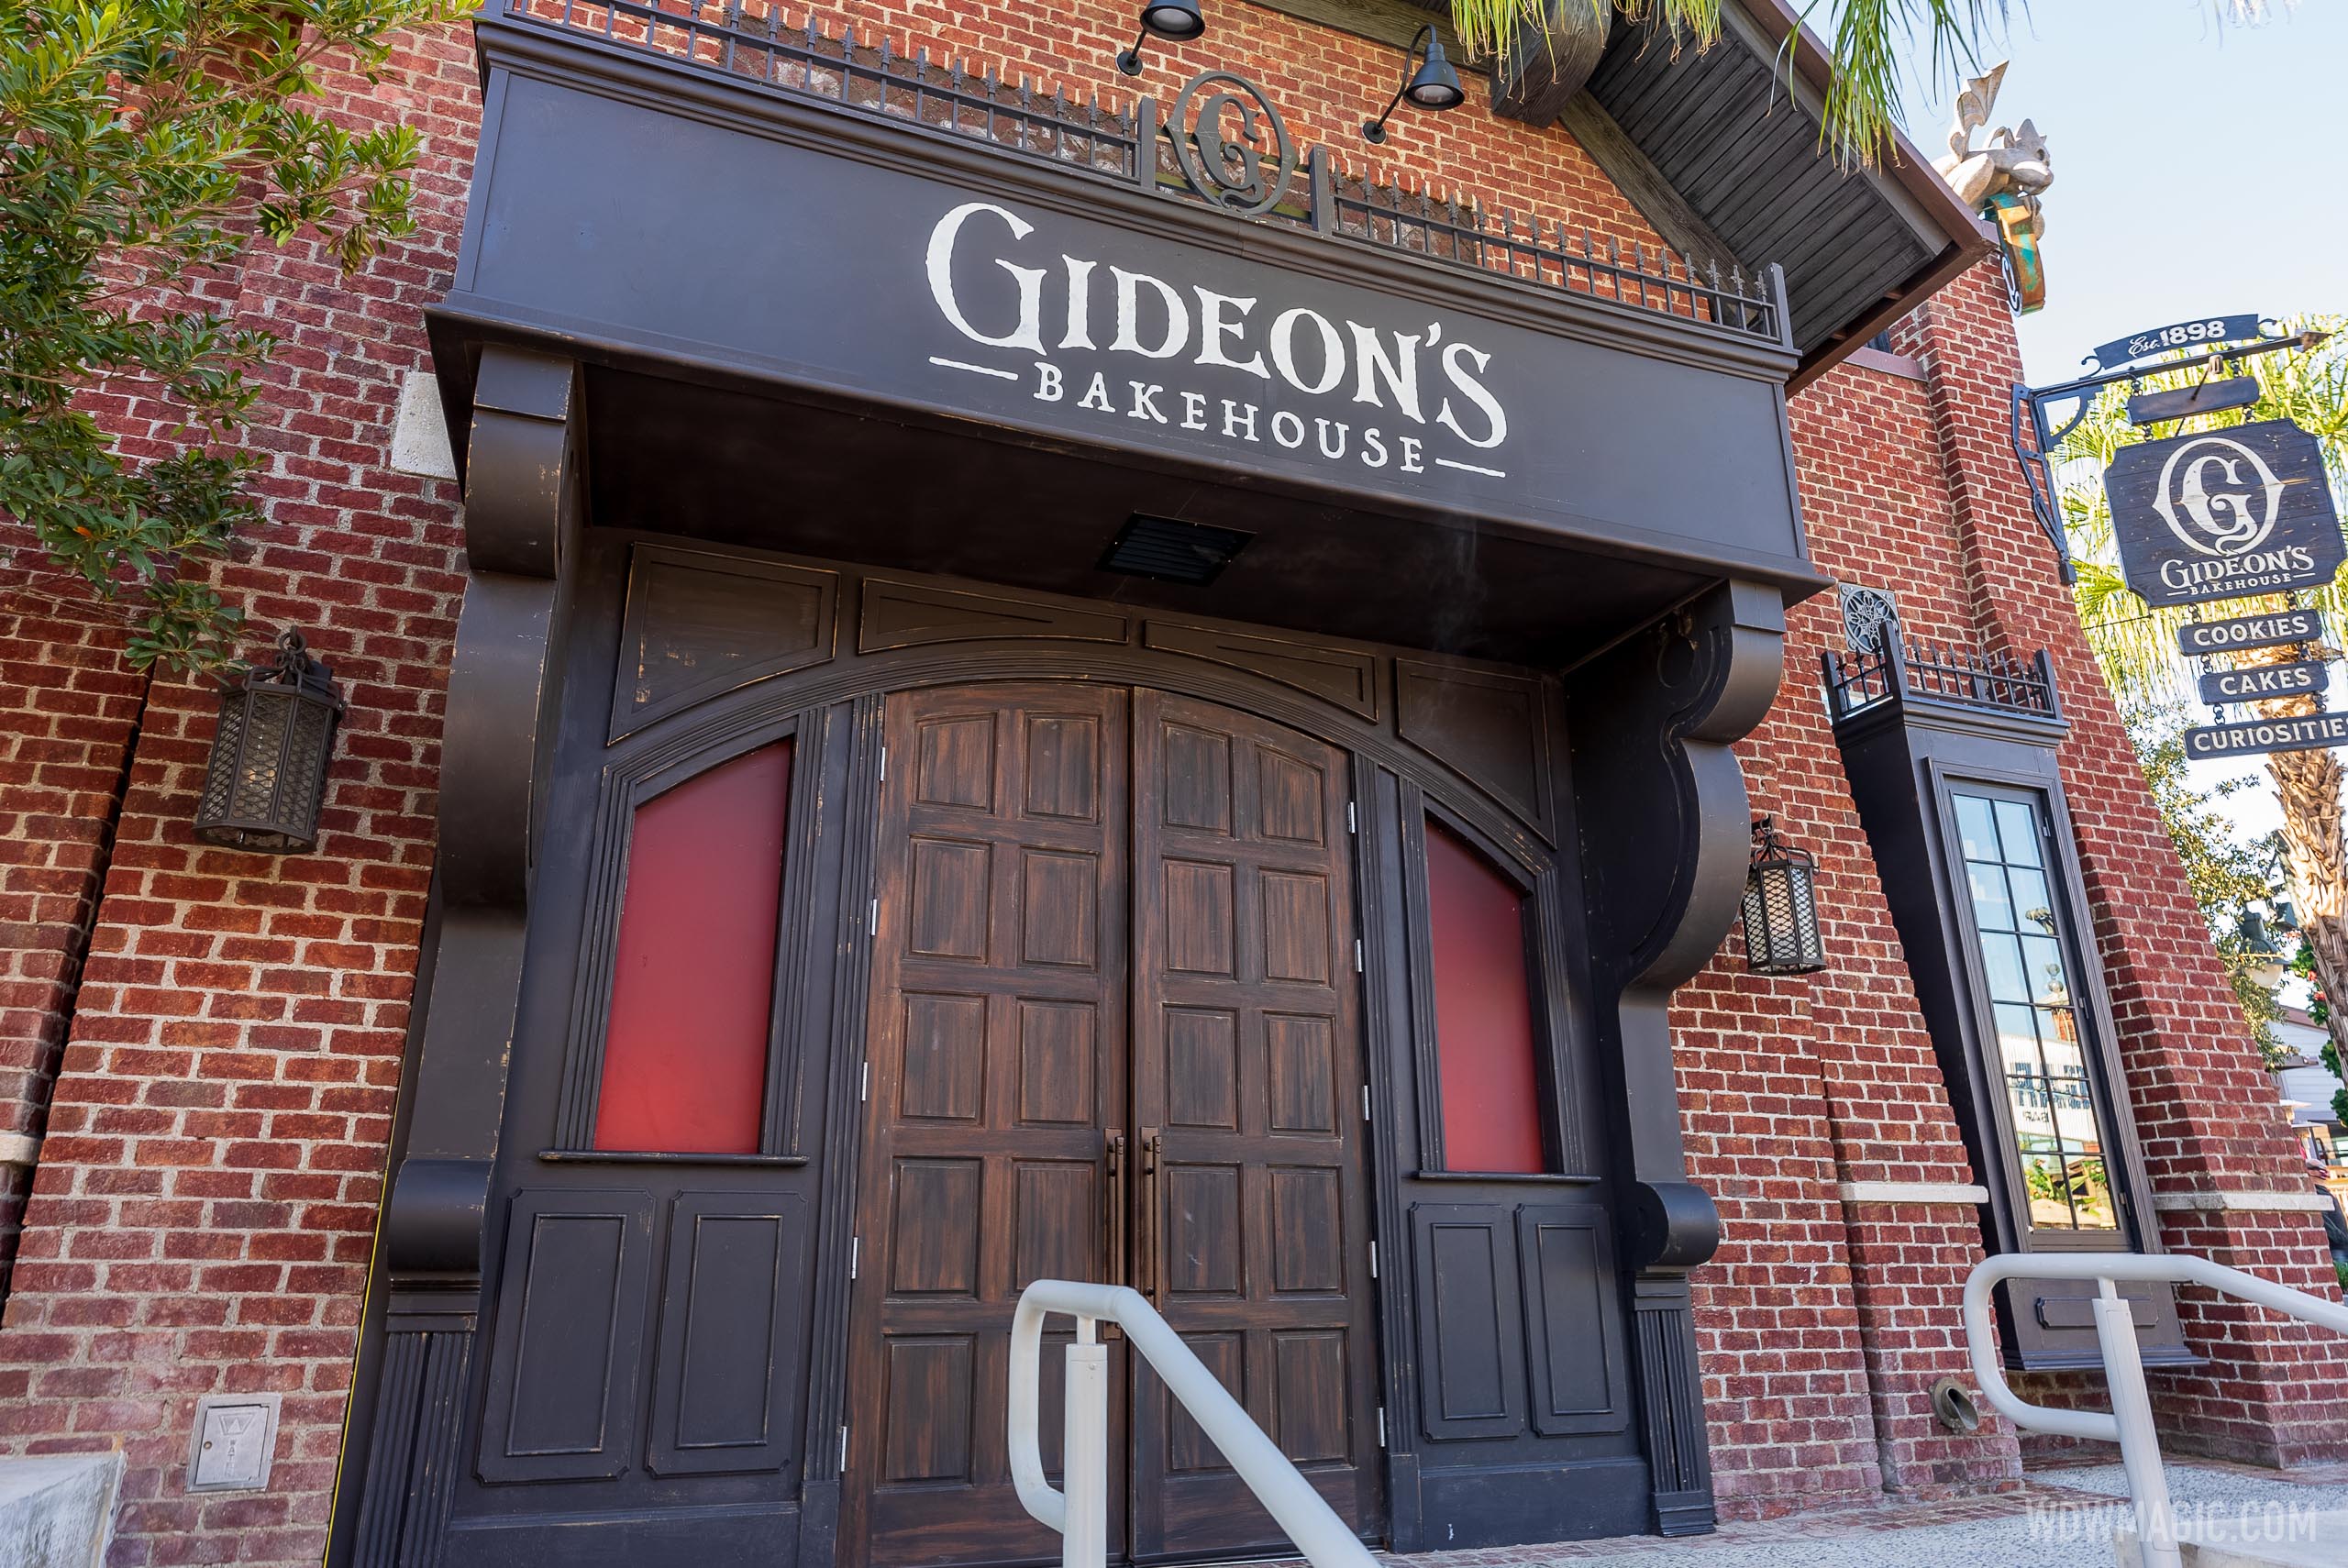 Gideon’s Bakehouse open at Disney Springs